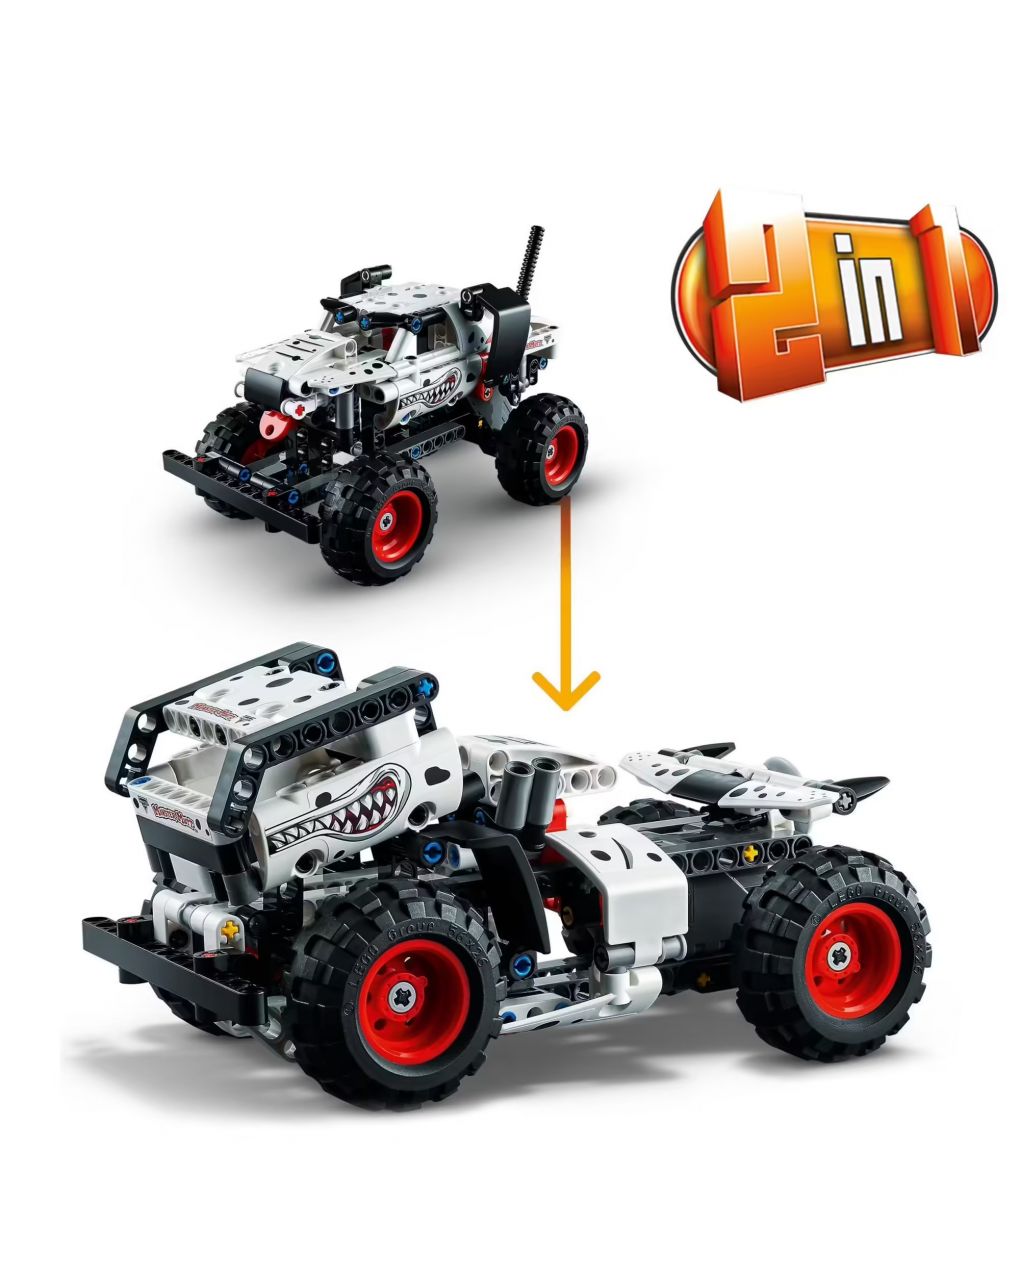 Monster mutt monster jam dalmata - set 2 in 1 con pull-back - auto offroad monster truck e camion giocattolo - lego technic - LEGO